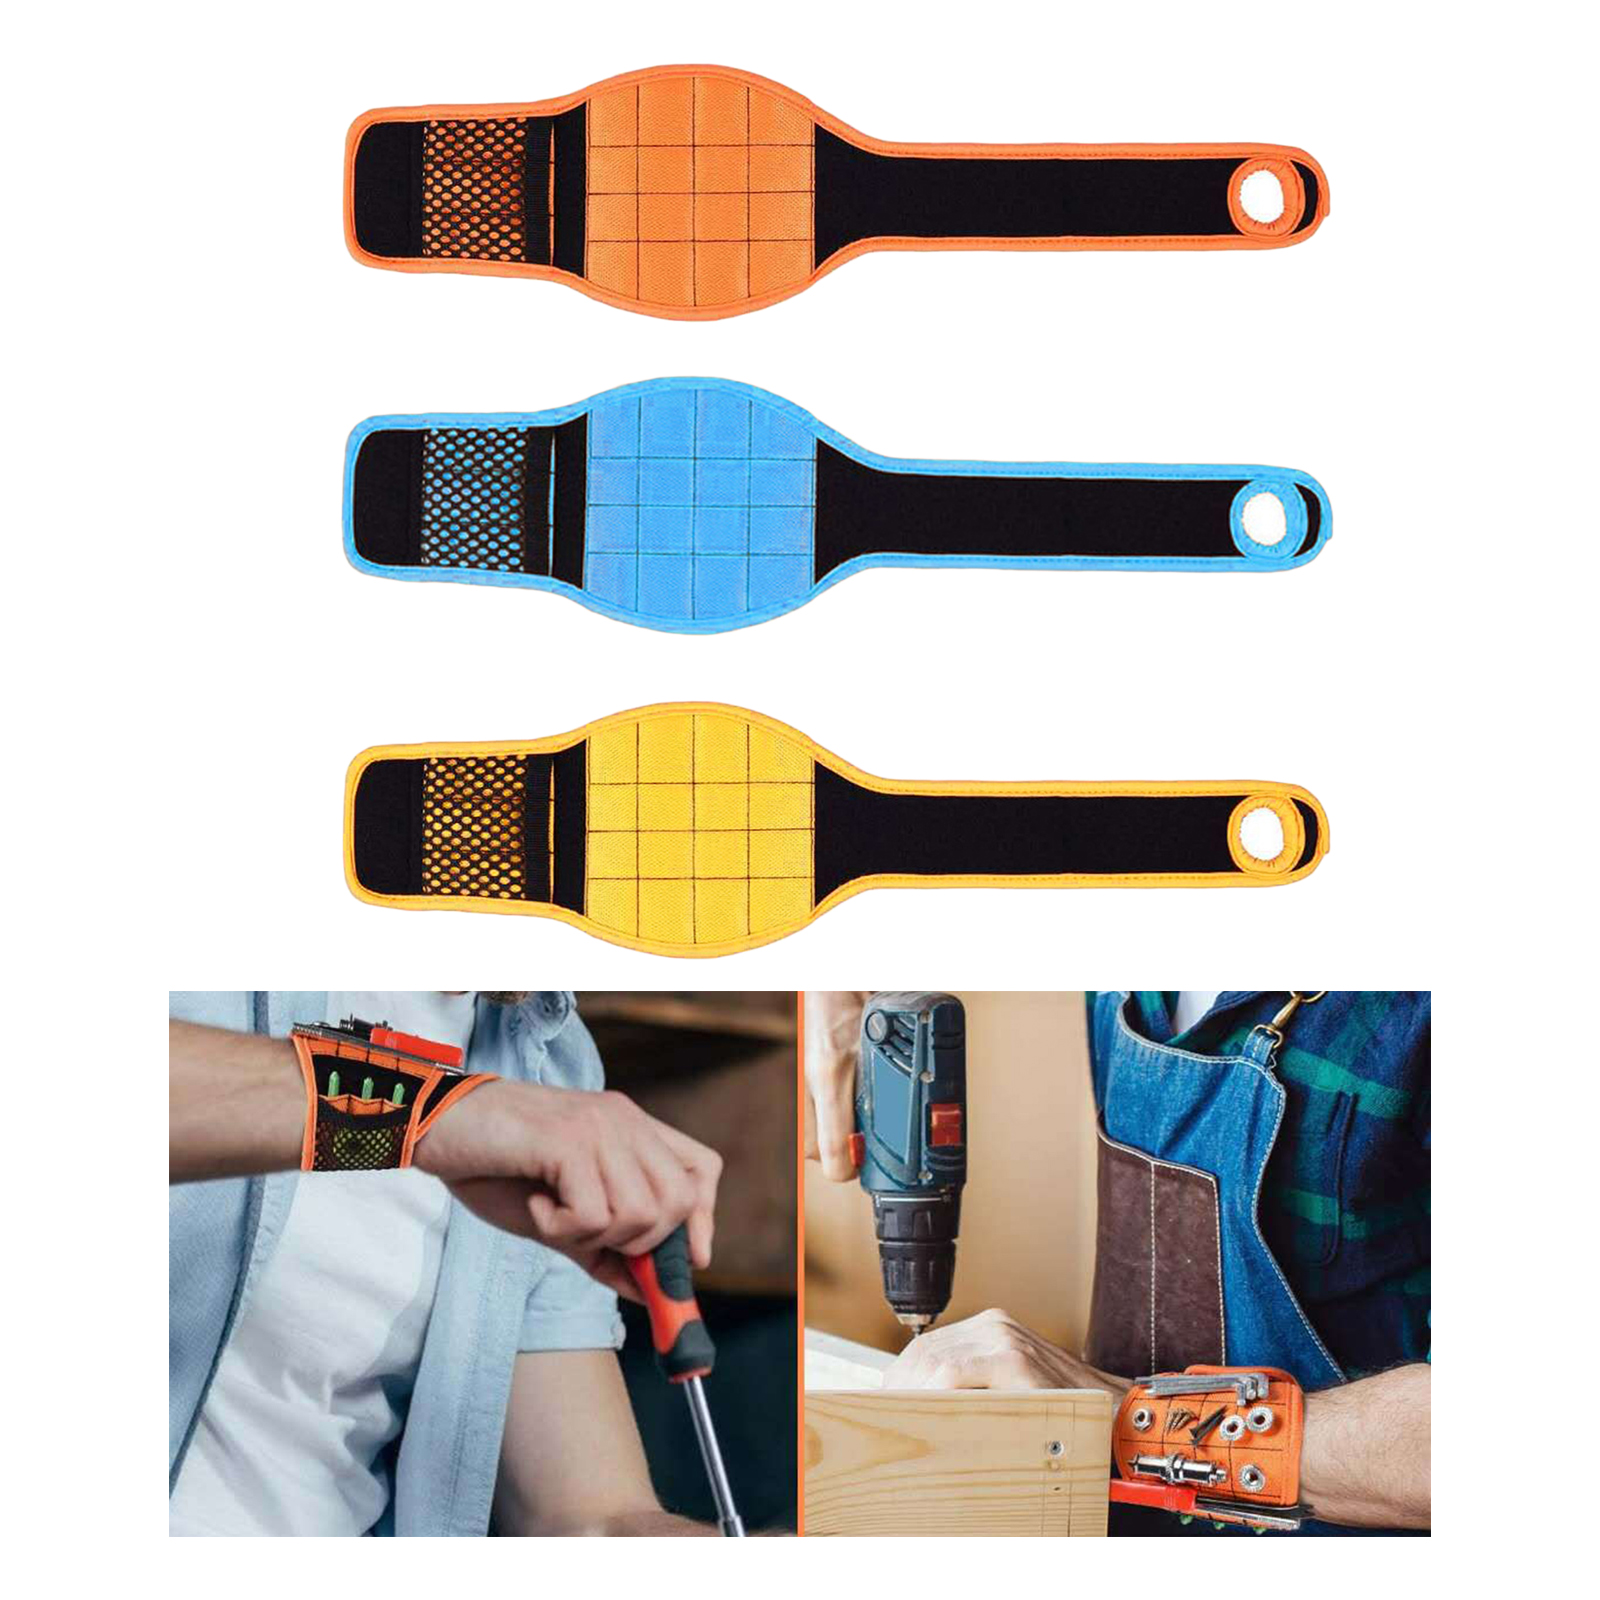 Magnetic Wristband Tool Belt for Holder Holding Screws Cool Gifts Gadgets Orange